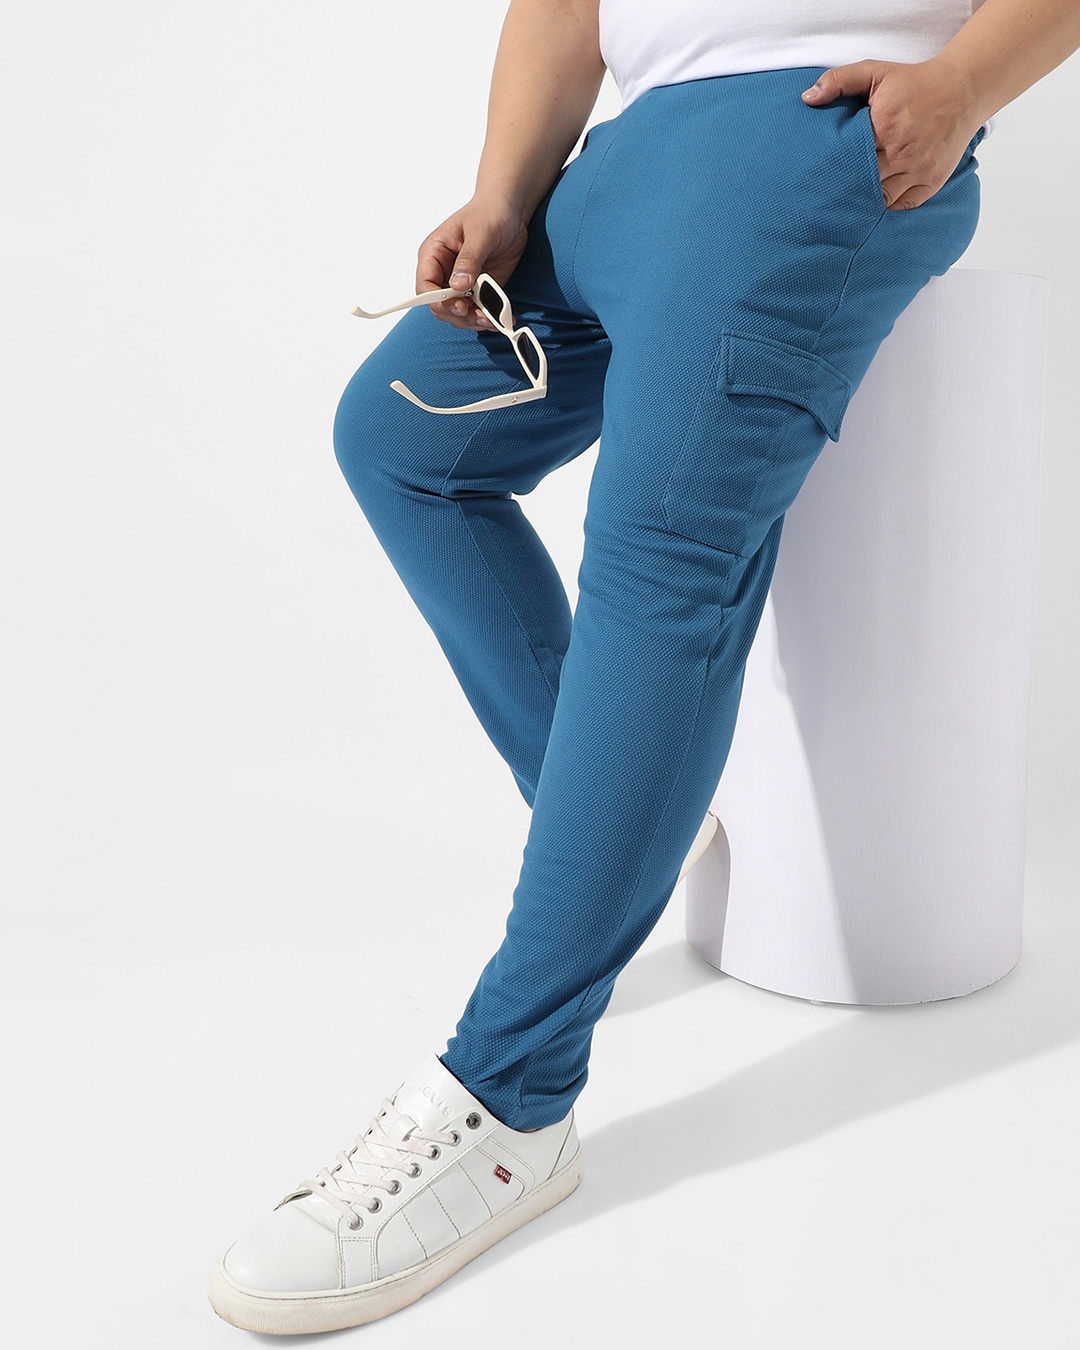 adidas Adicolor SST Track Pants (Plus Size) - Red | Women's Lifestyle |  adidas US